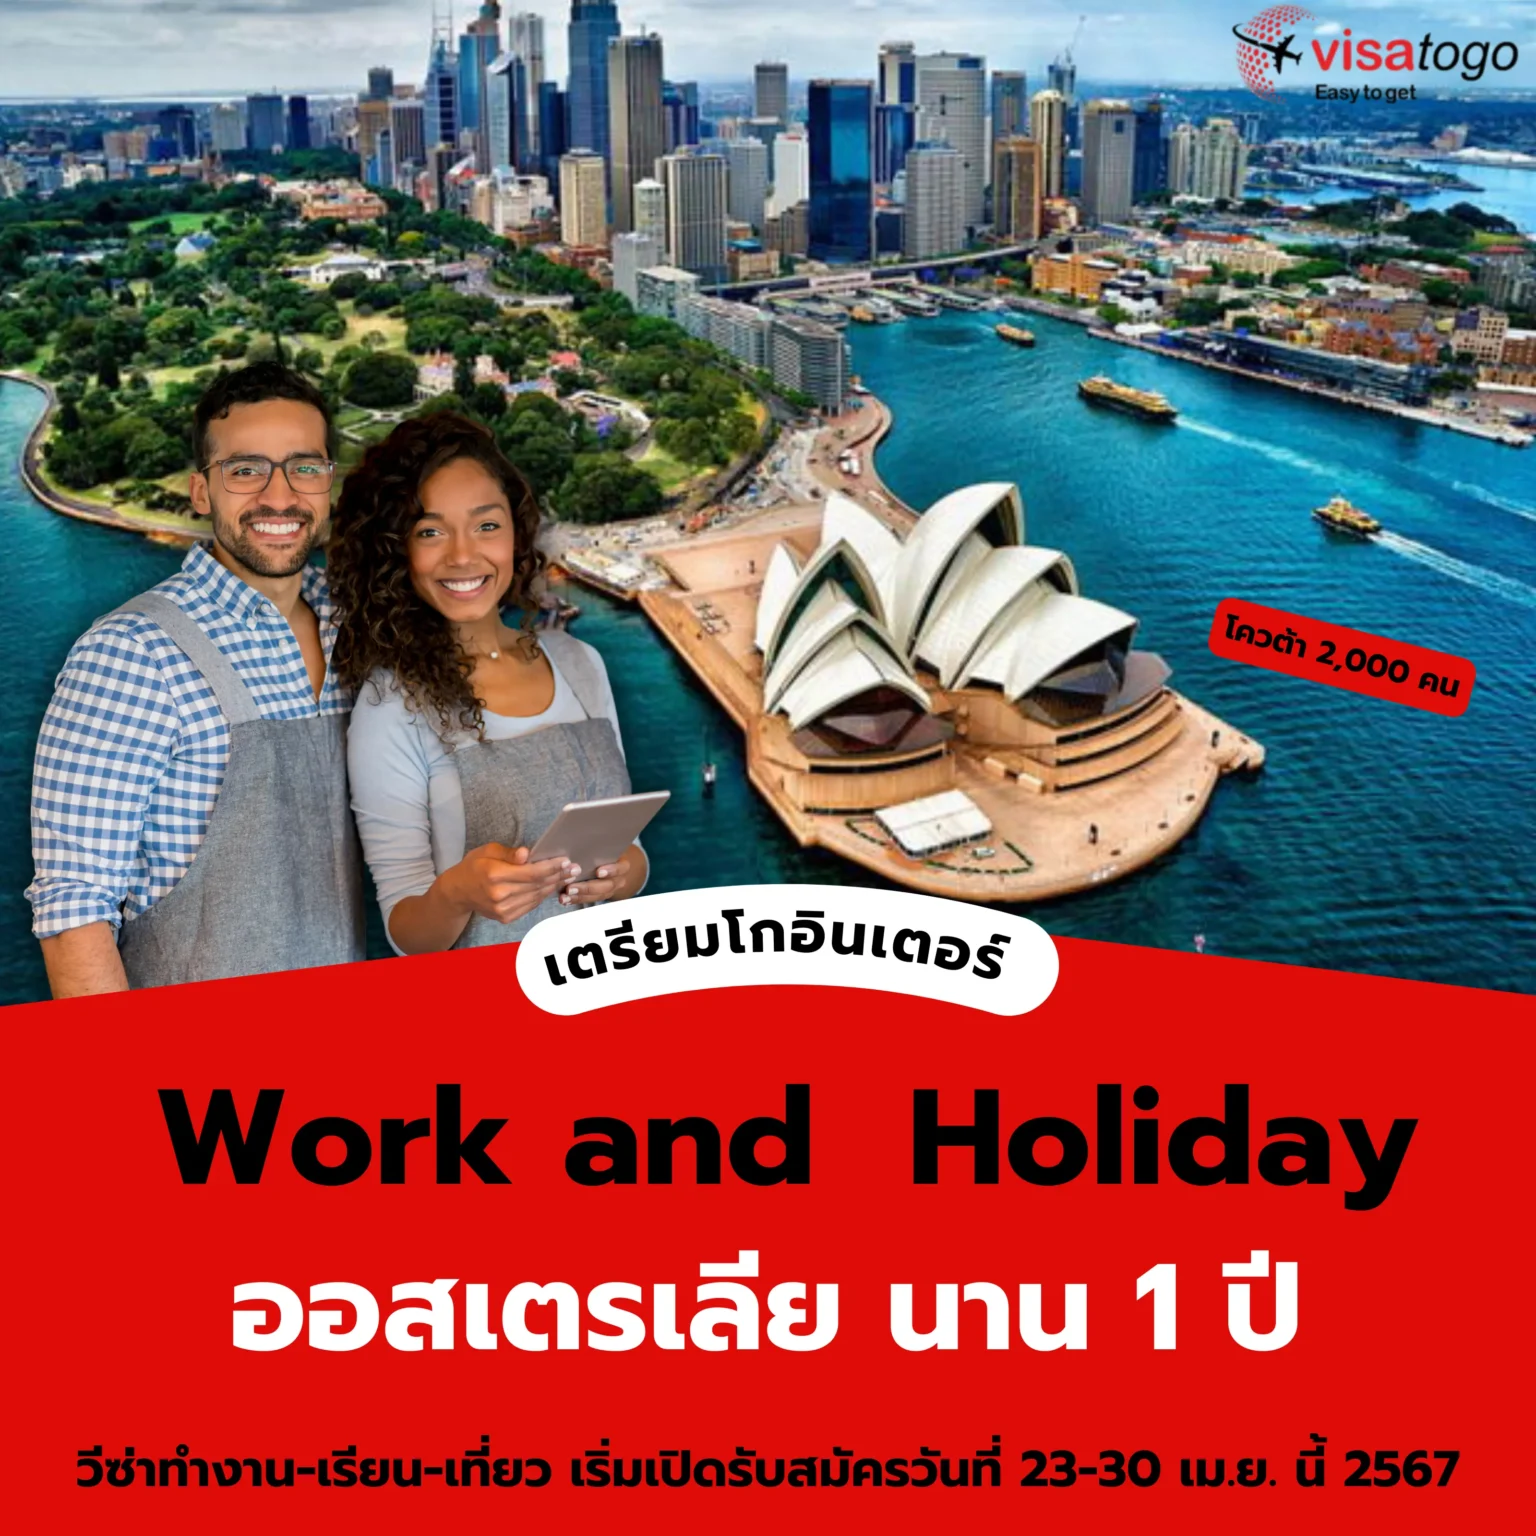 work and Holiday ออสเตรเลีย